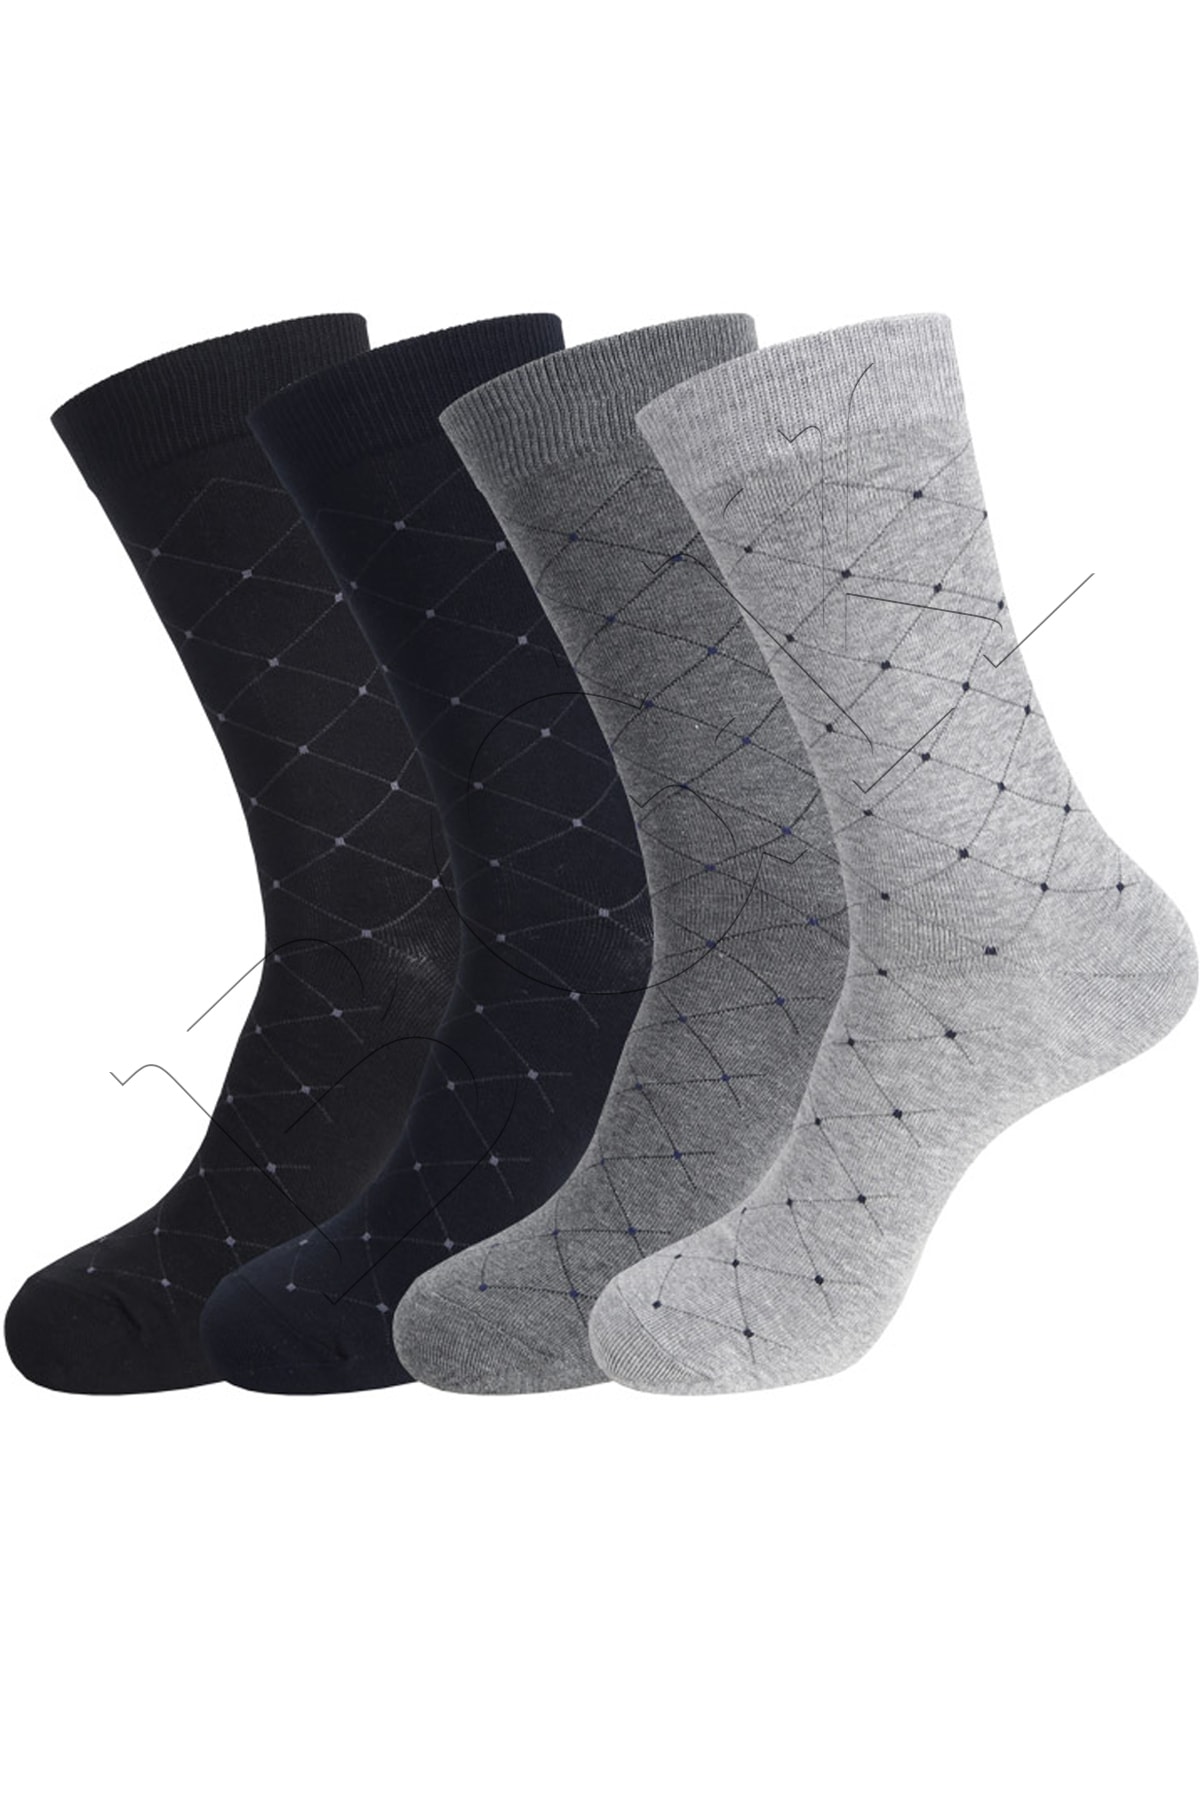 BGK Socken Mehrfarbig 4-teilig